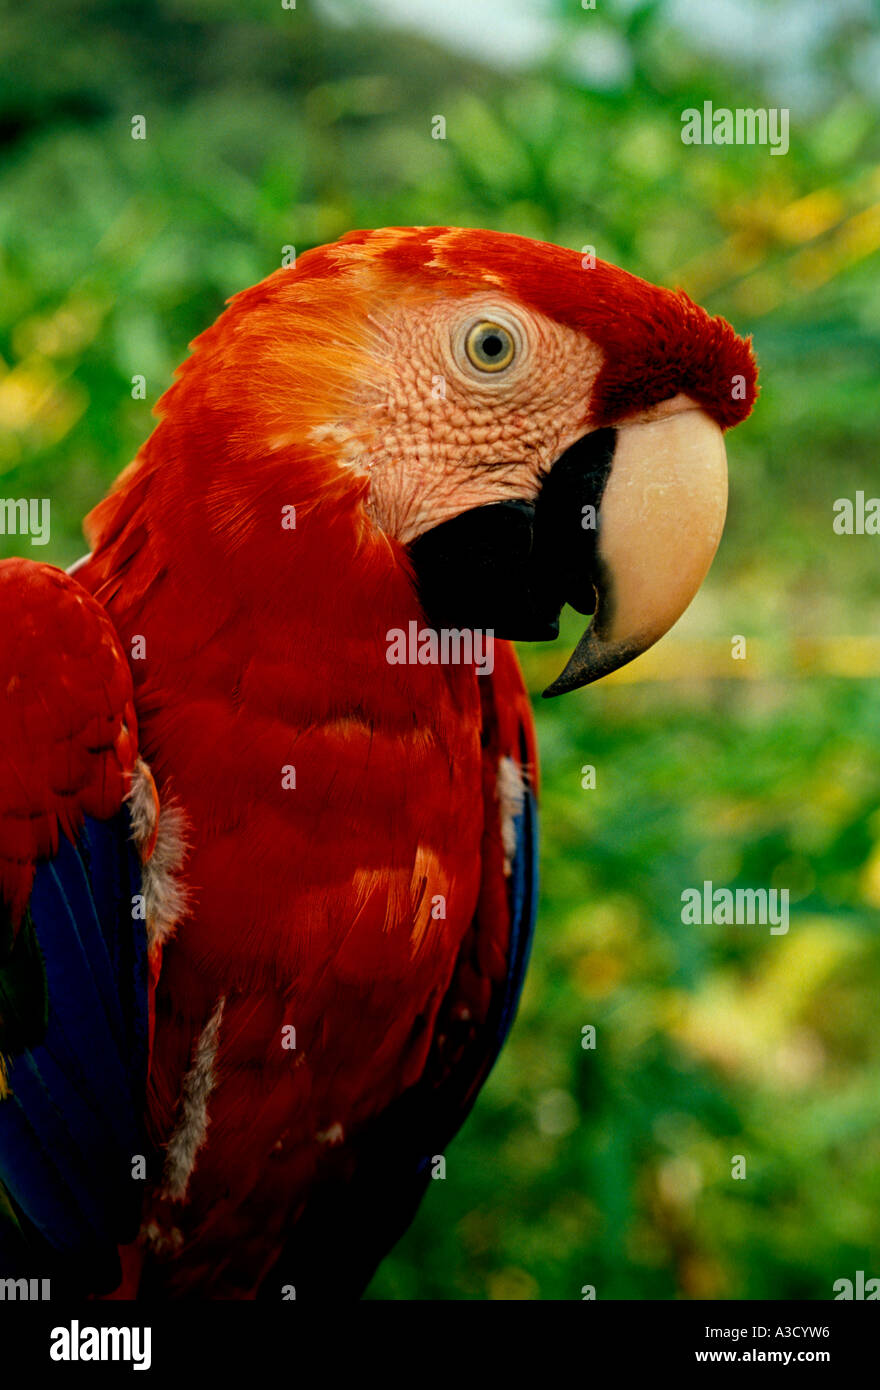 1 One Scarlet Macaw Macaw Macaws Bird Birds Puraquequara River Amazon Rainforest Northeast Of Manaus Amazonas State Brazil South America Stock Photo Alamy